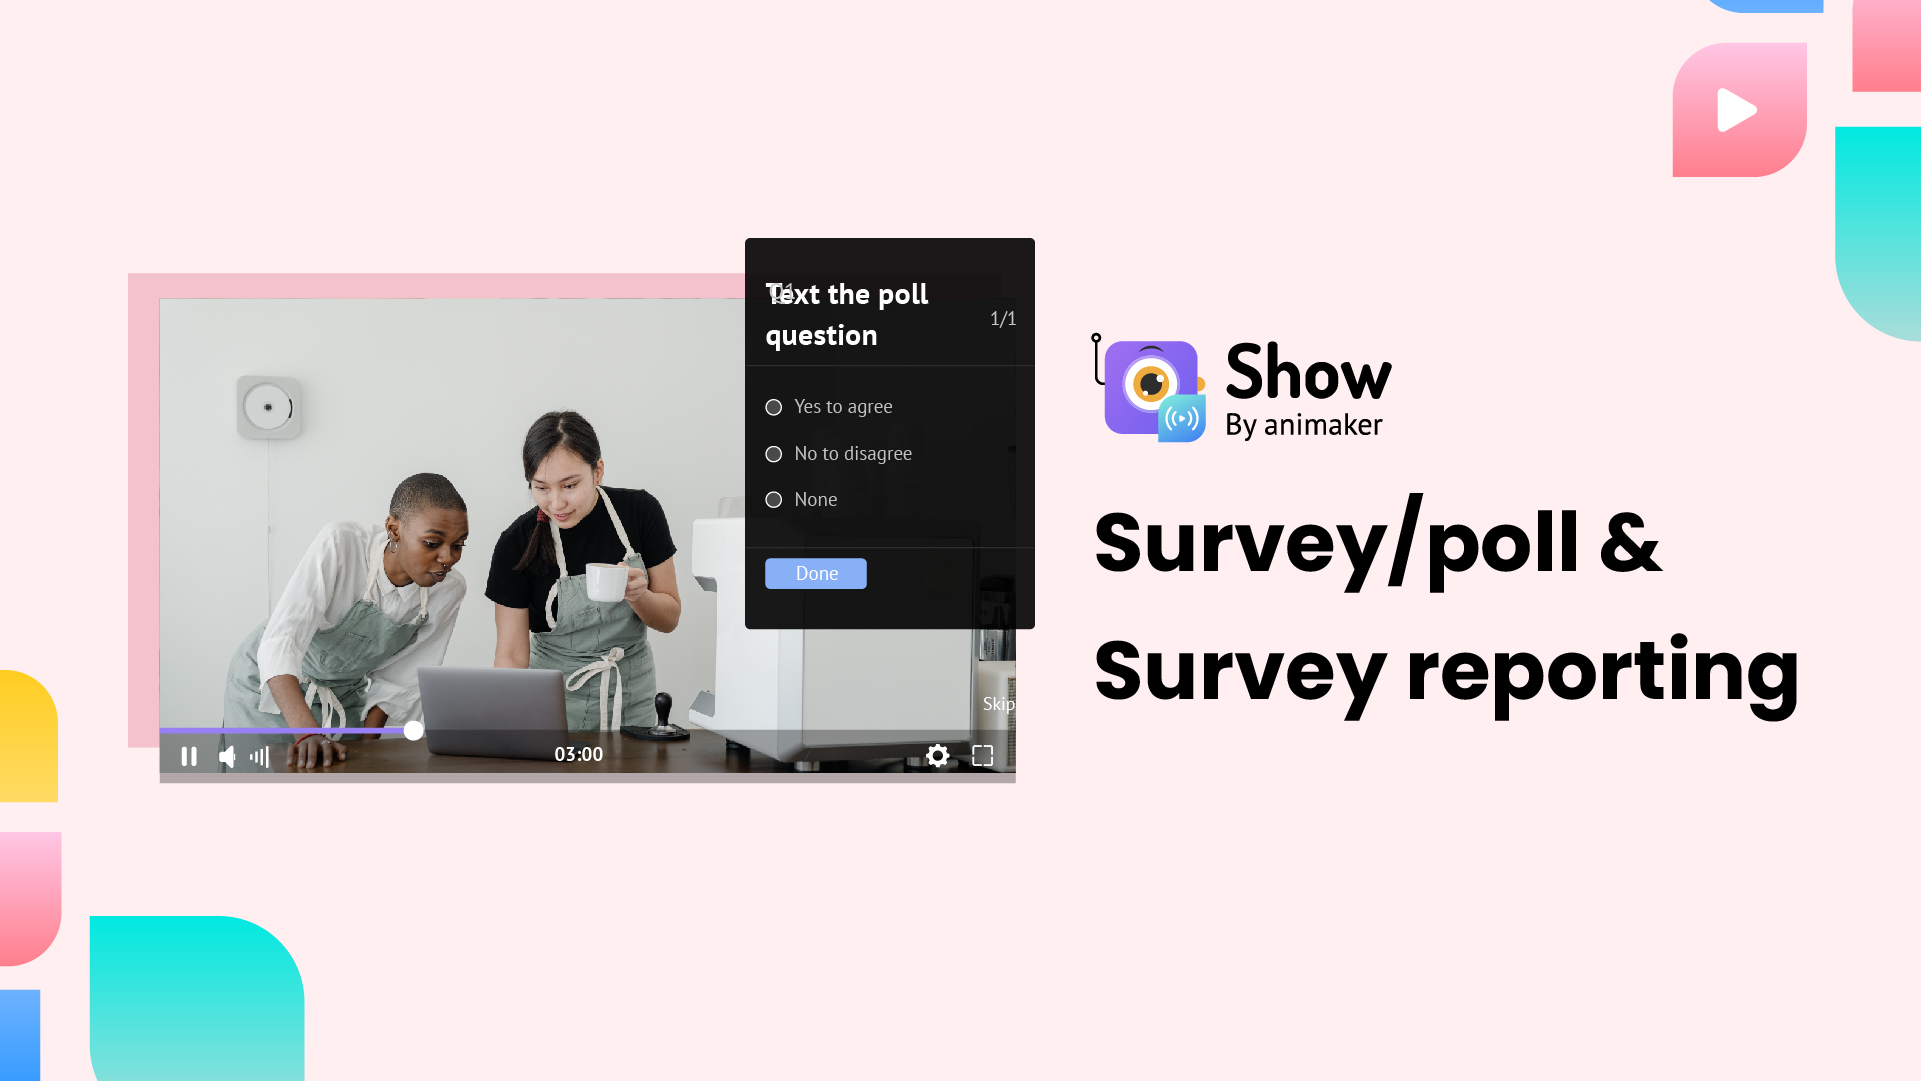 Survey/poll & Survey reporting